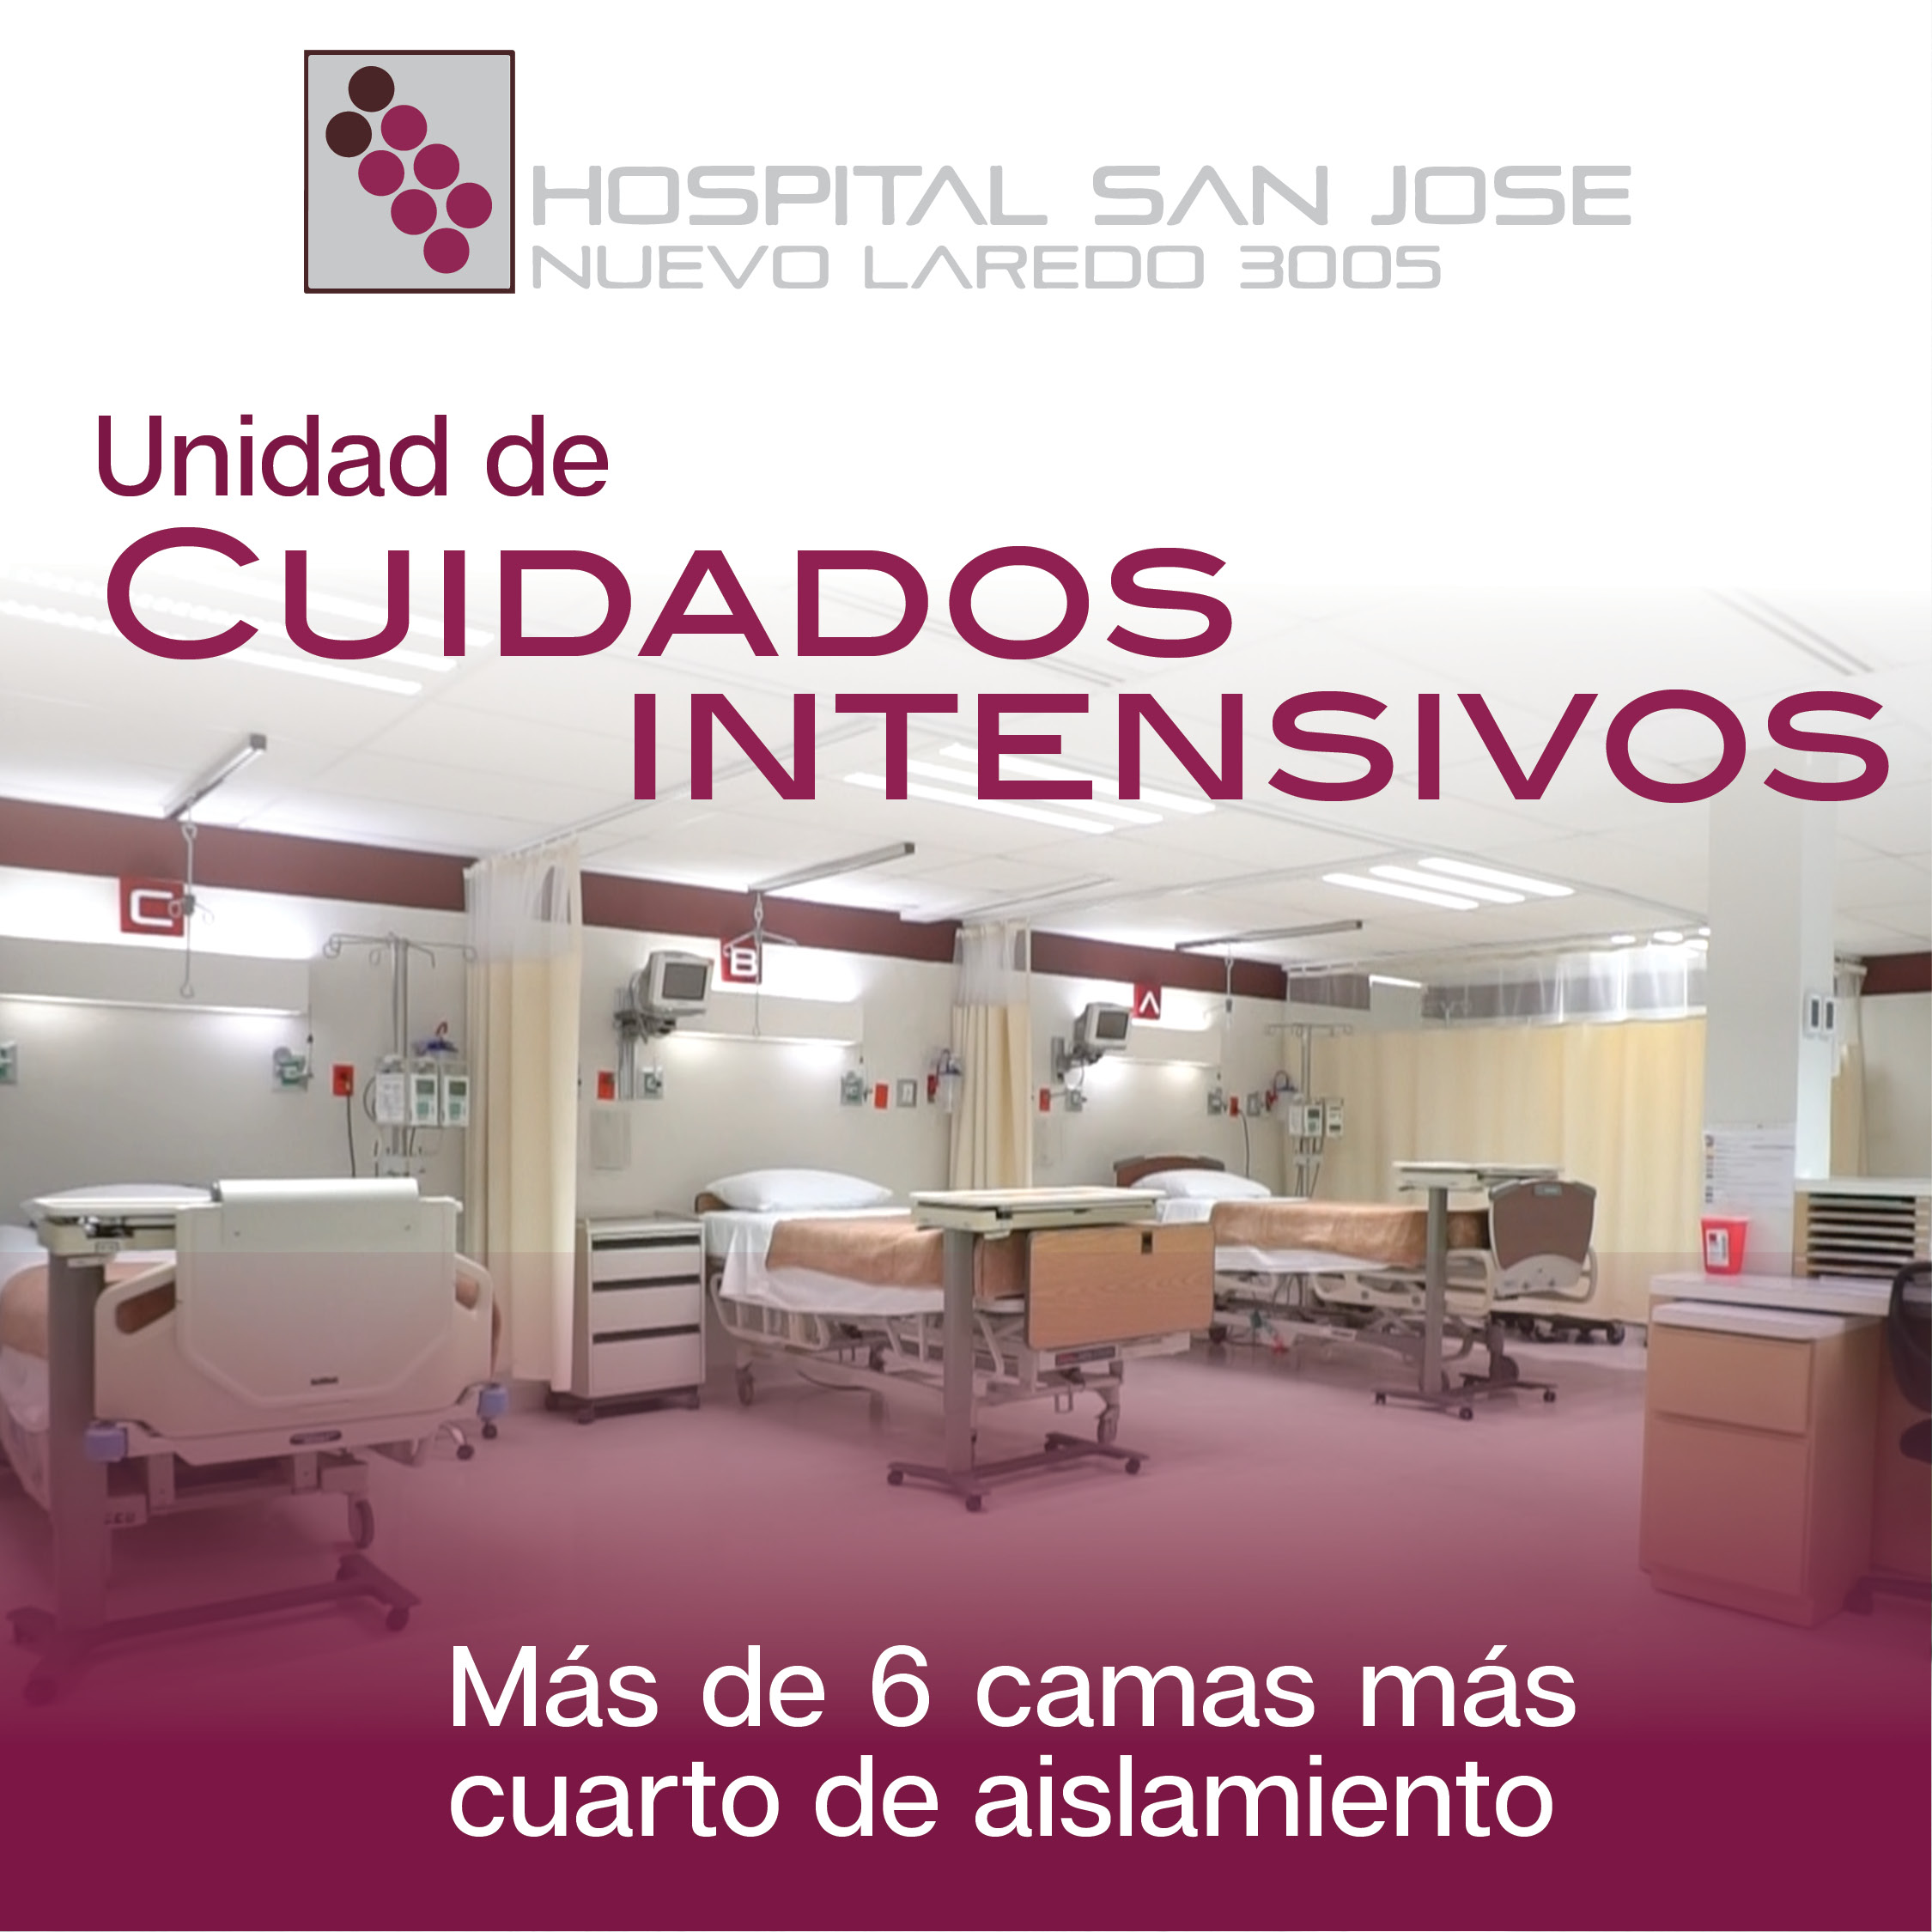 Hospital San José de Nuevo Laredo